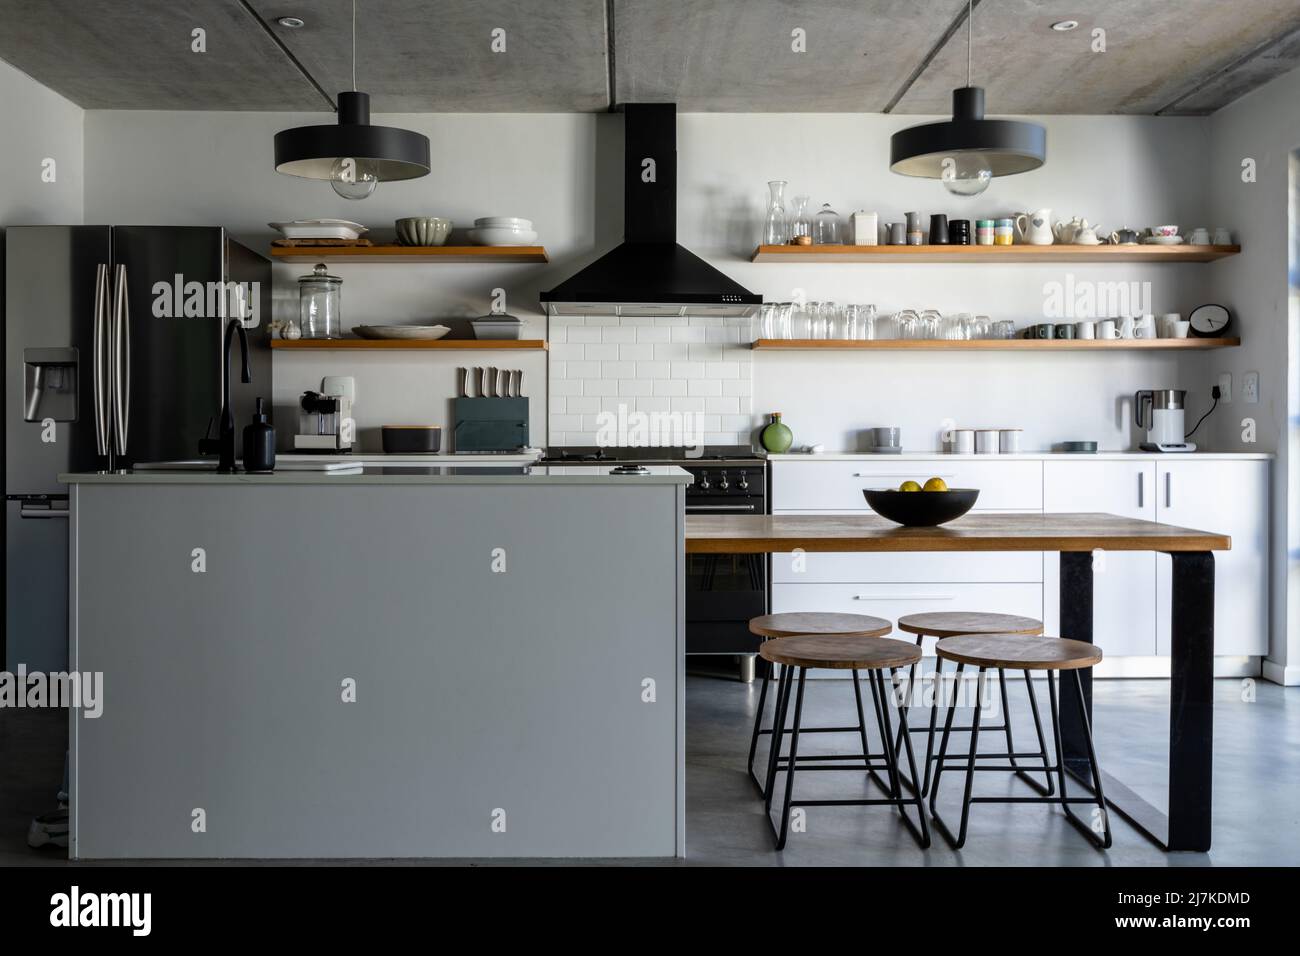 Interior of modern kitchen with appliances, utensils and kitchen island Stock Photo